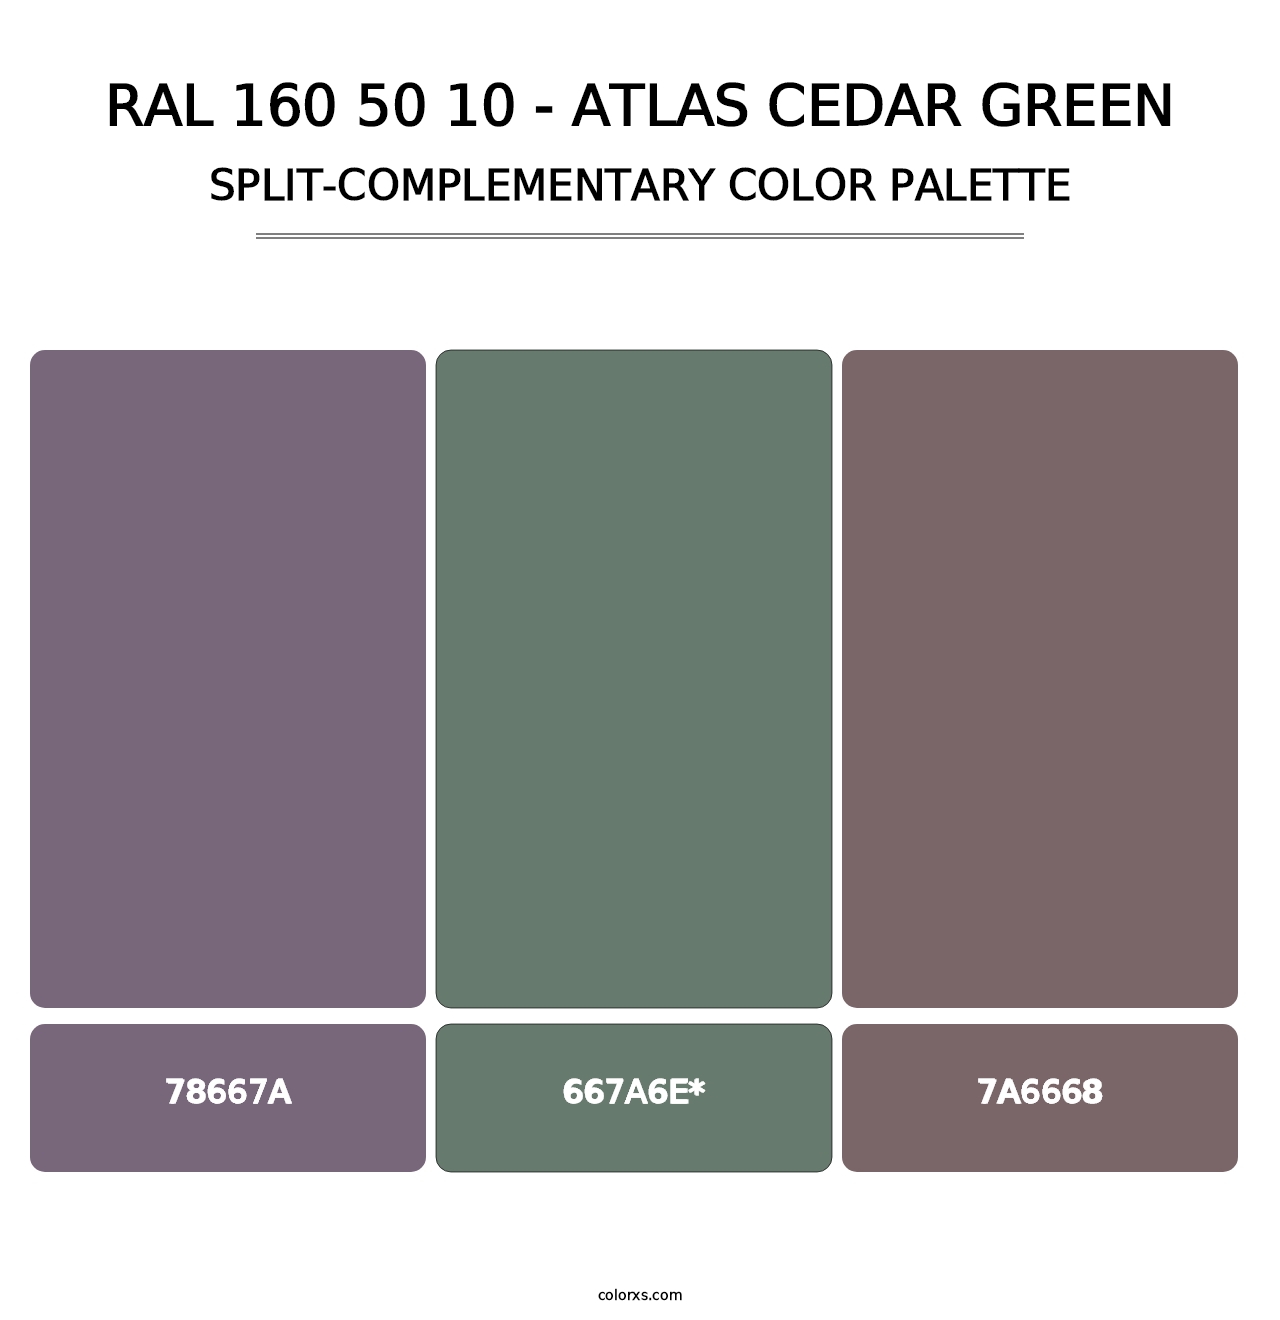 RAL 160 50 10 - Atlas Cedar Green - Split-Complementary Color Palette